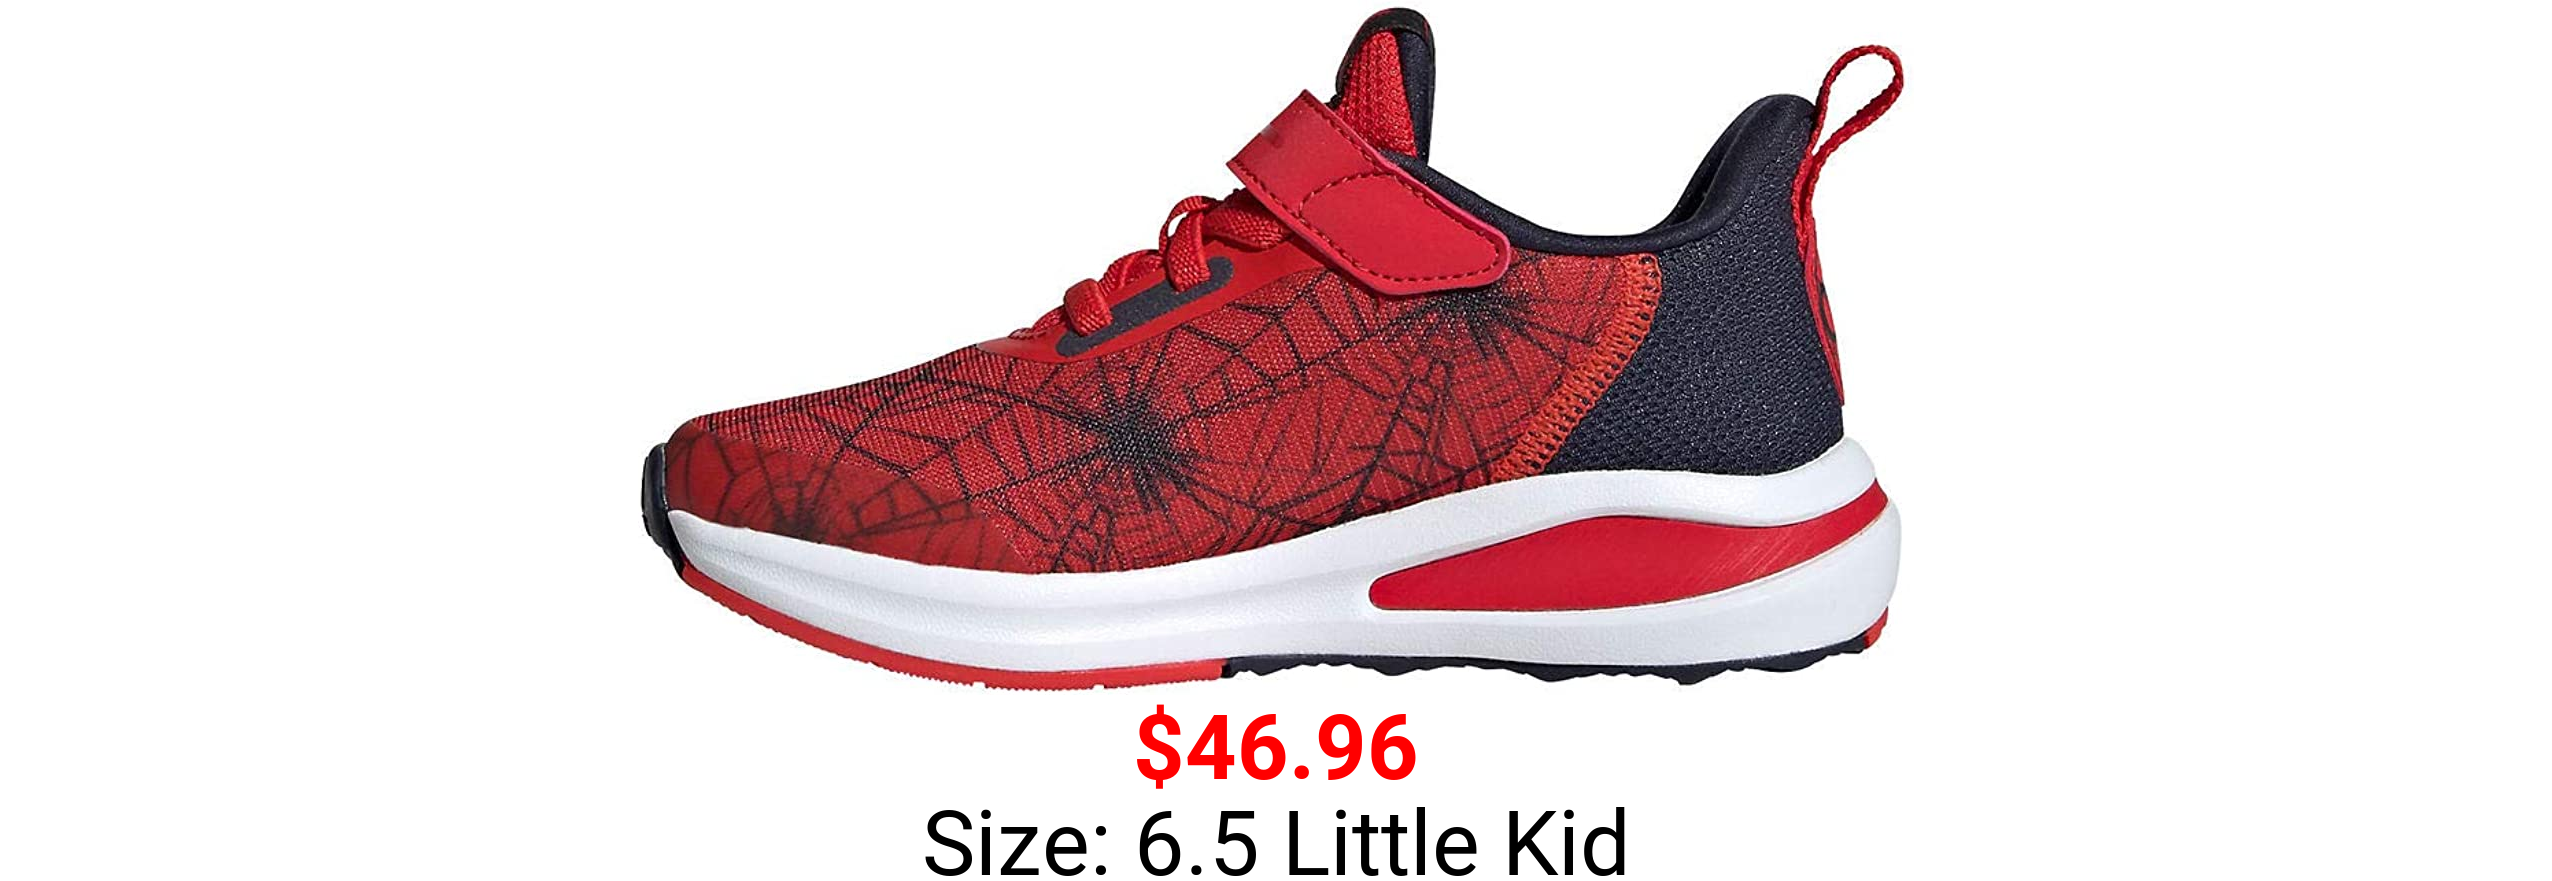 adidas Unisex-Child Fortarun Spiderman Elastic Running Shoe